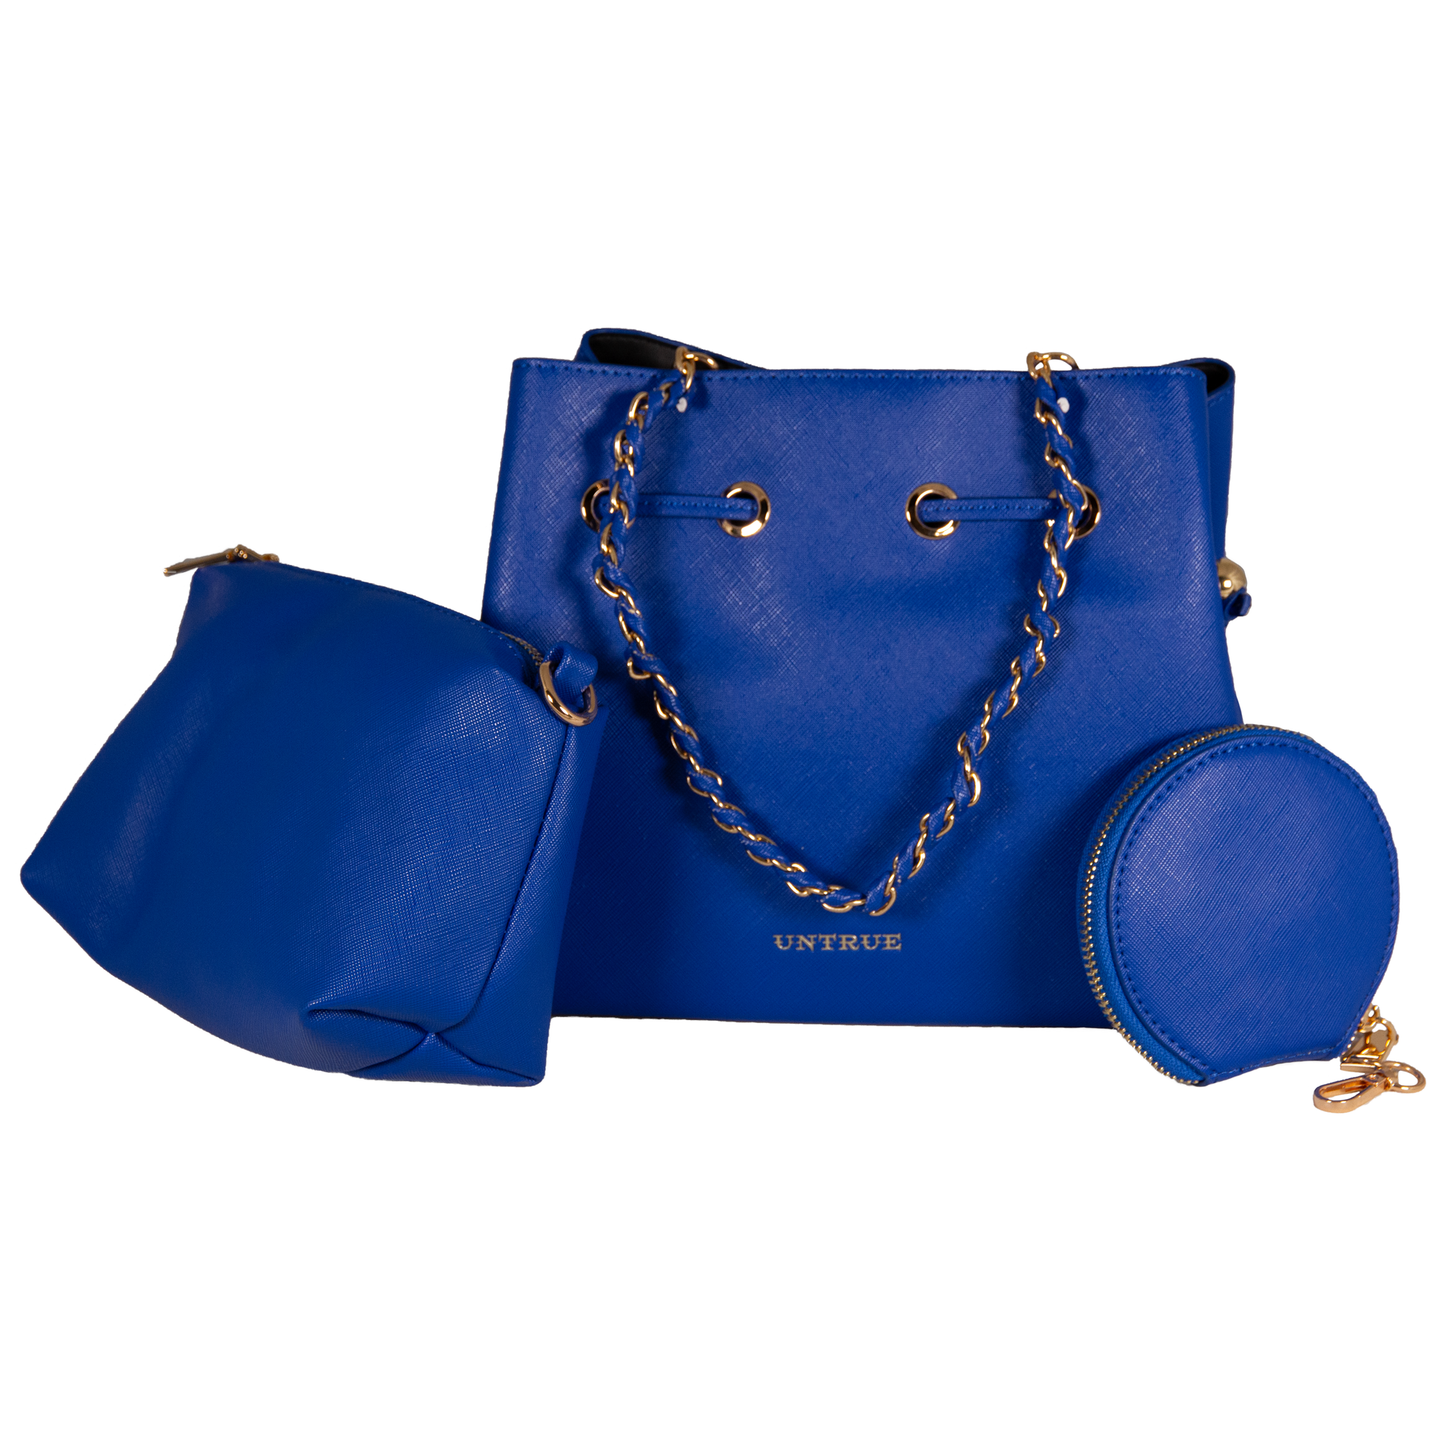 ONMZ Women's Tote Handbag - Blue